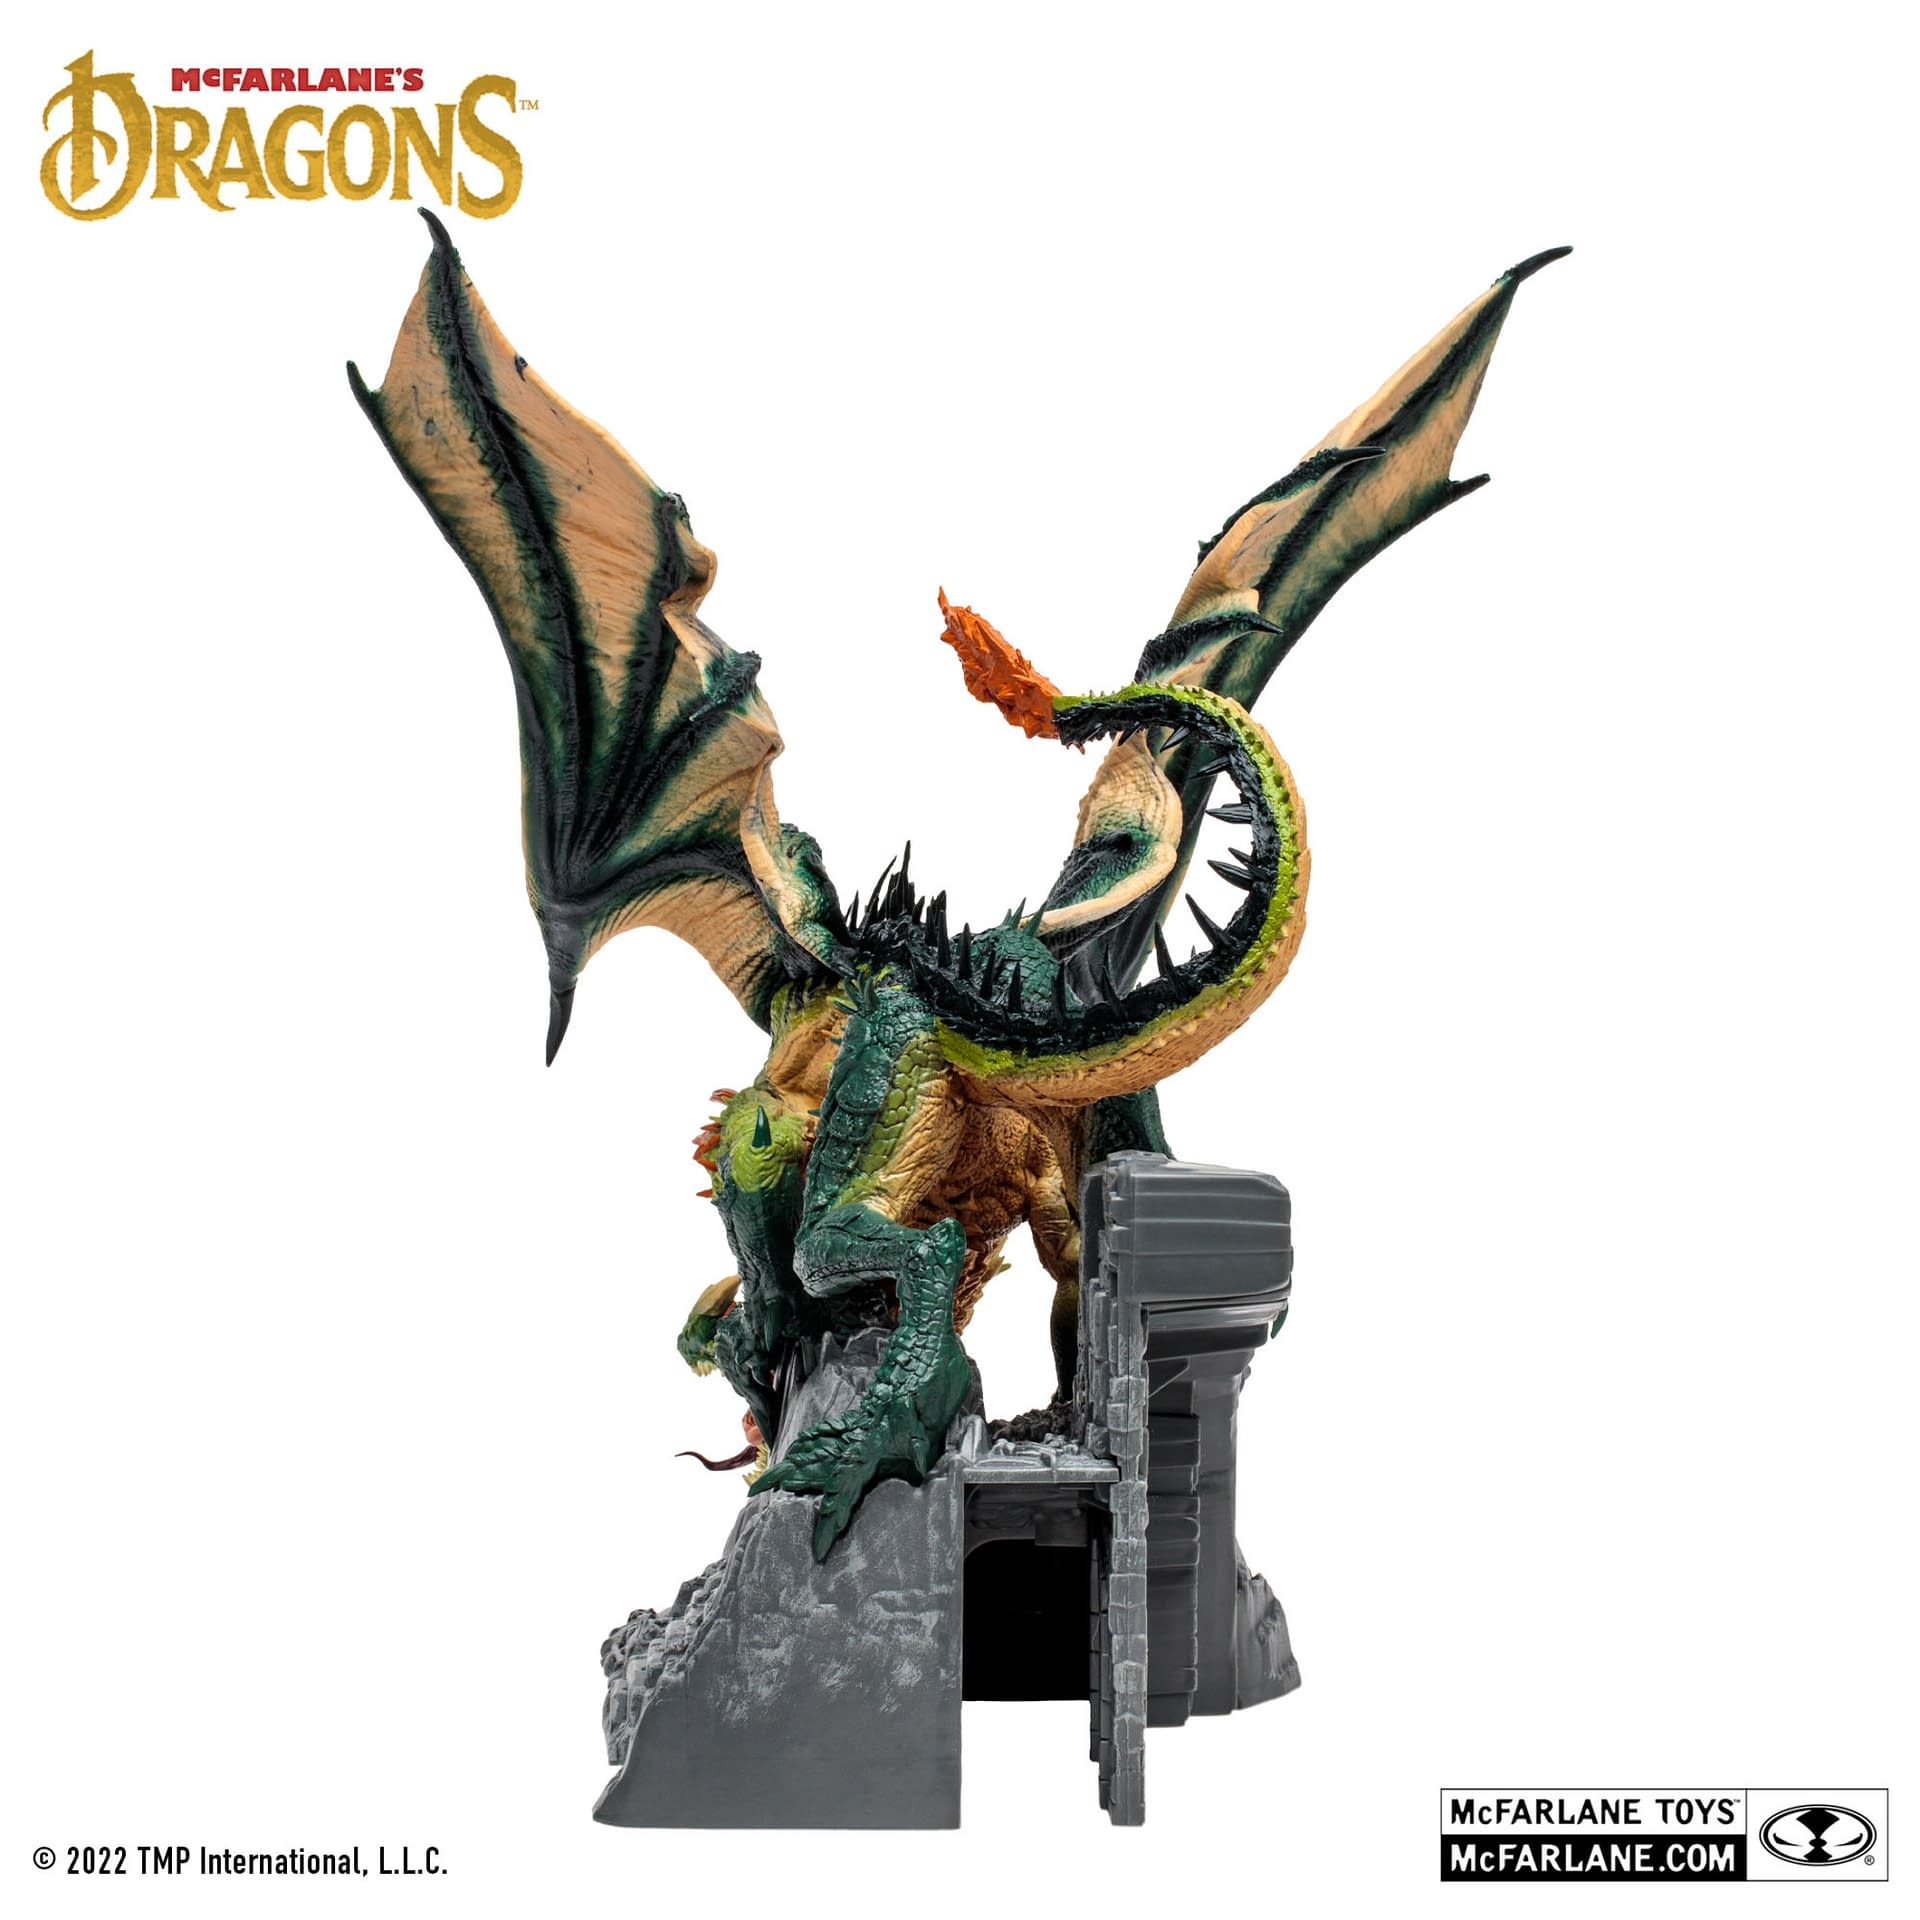 McFarlane's Dragons Continues with Sybaris (Berserker Clan) Statue